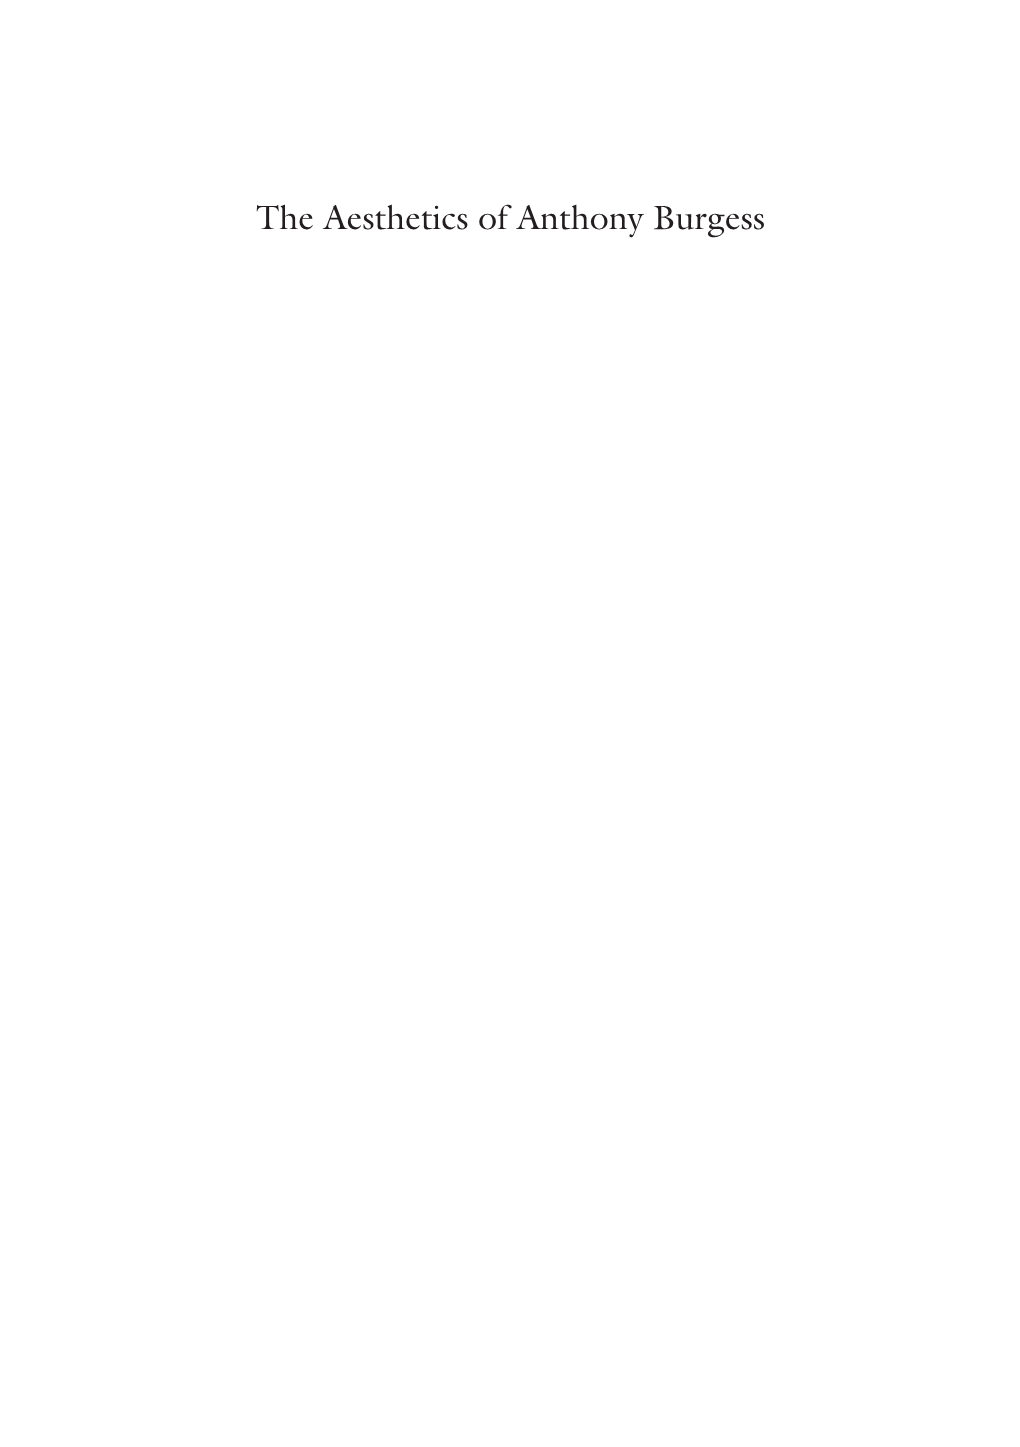 The Aesthetics of Anthony Burgess Jim Clarke the Aesthetics of Anthony Burgess